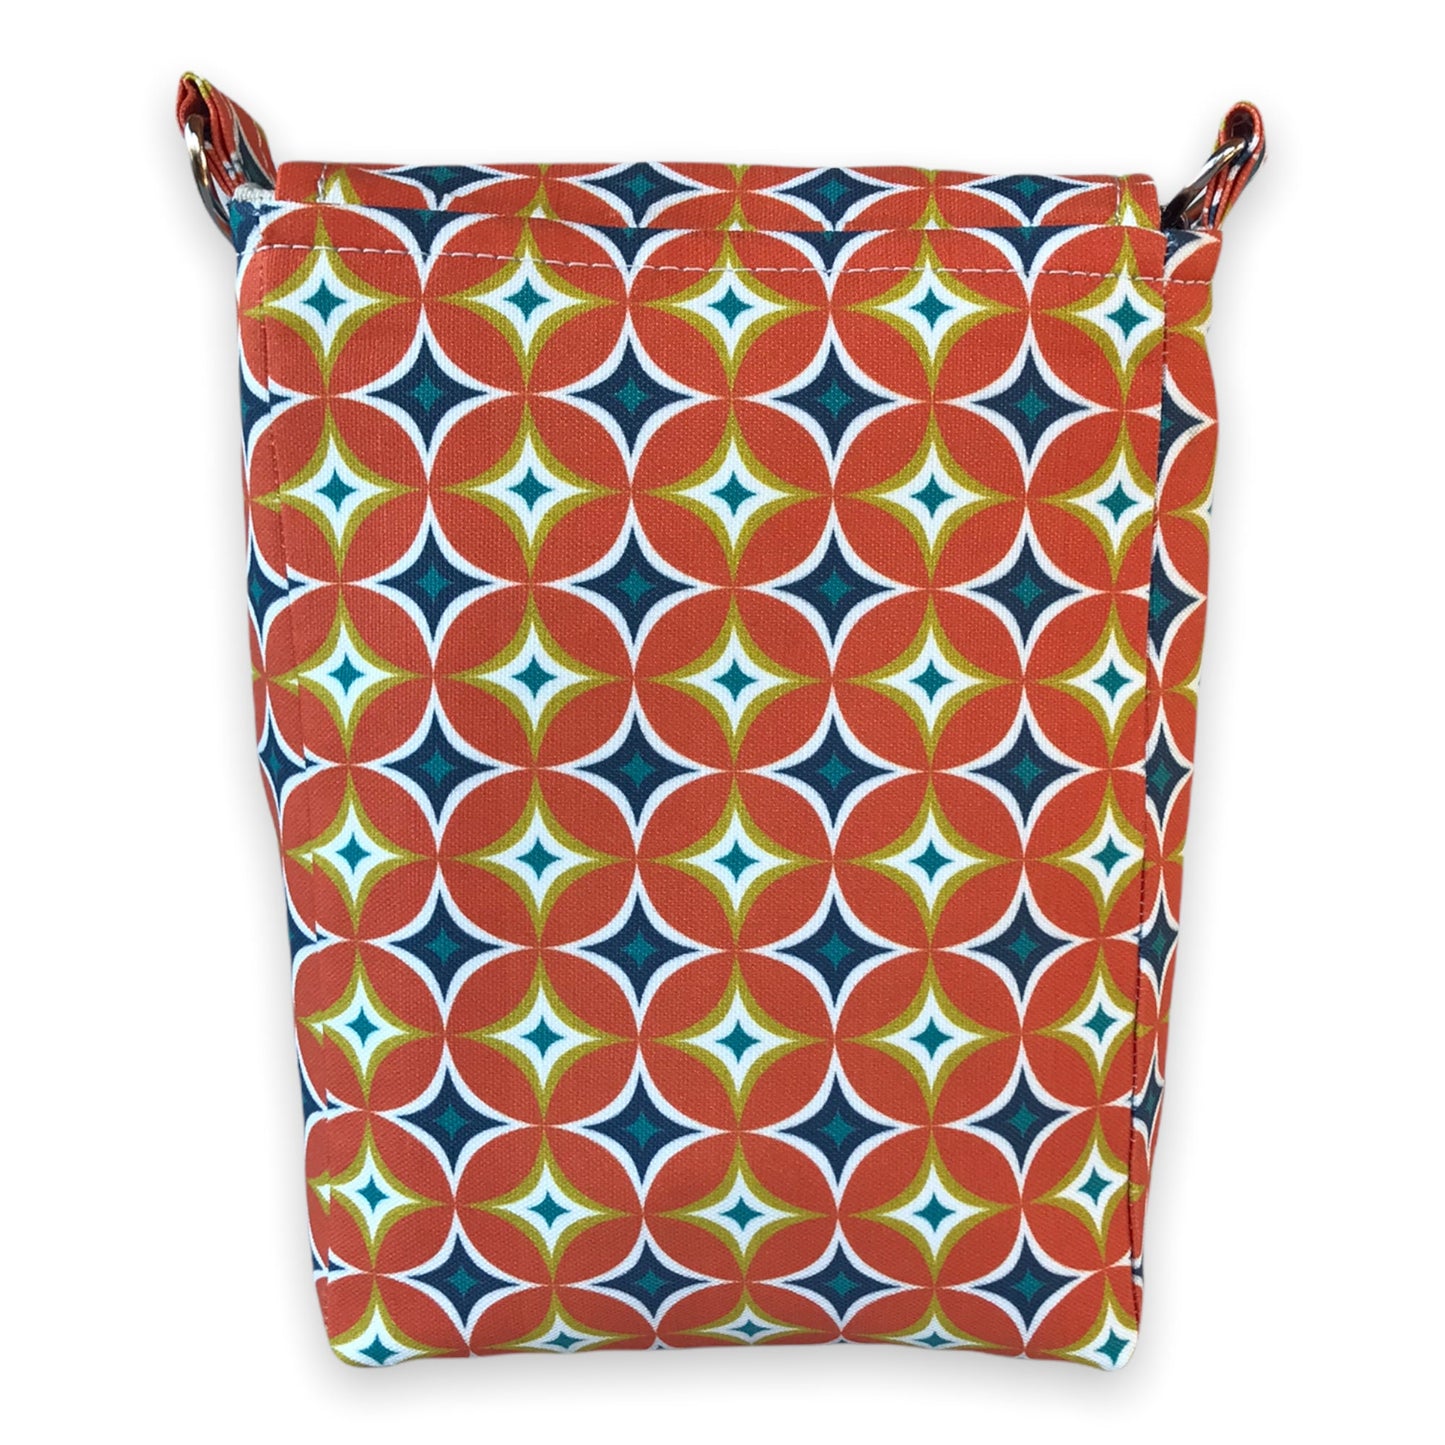 Mid-century modern geometric print crossbody bag, mini messenger style, orange, navy, & yellow, 8.5"x6".